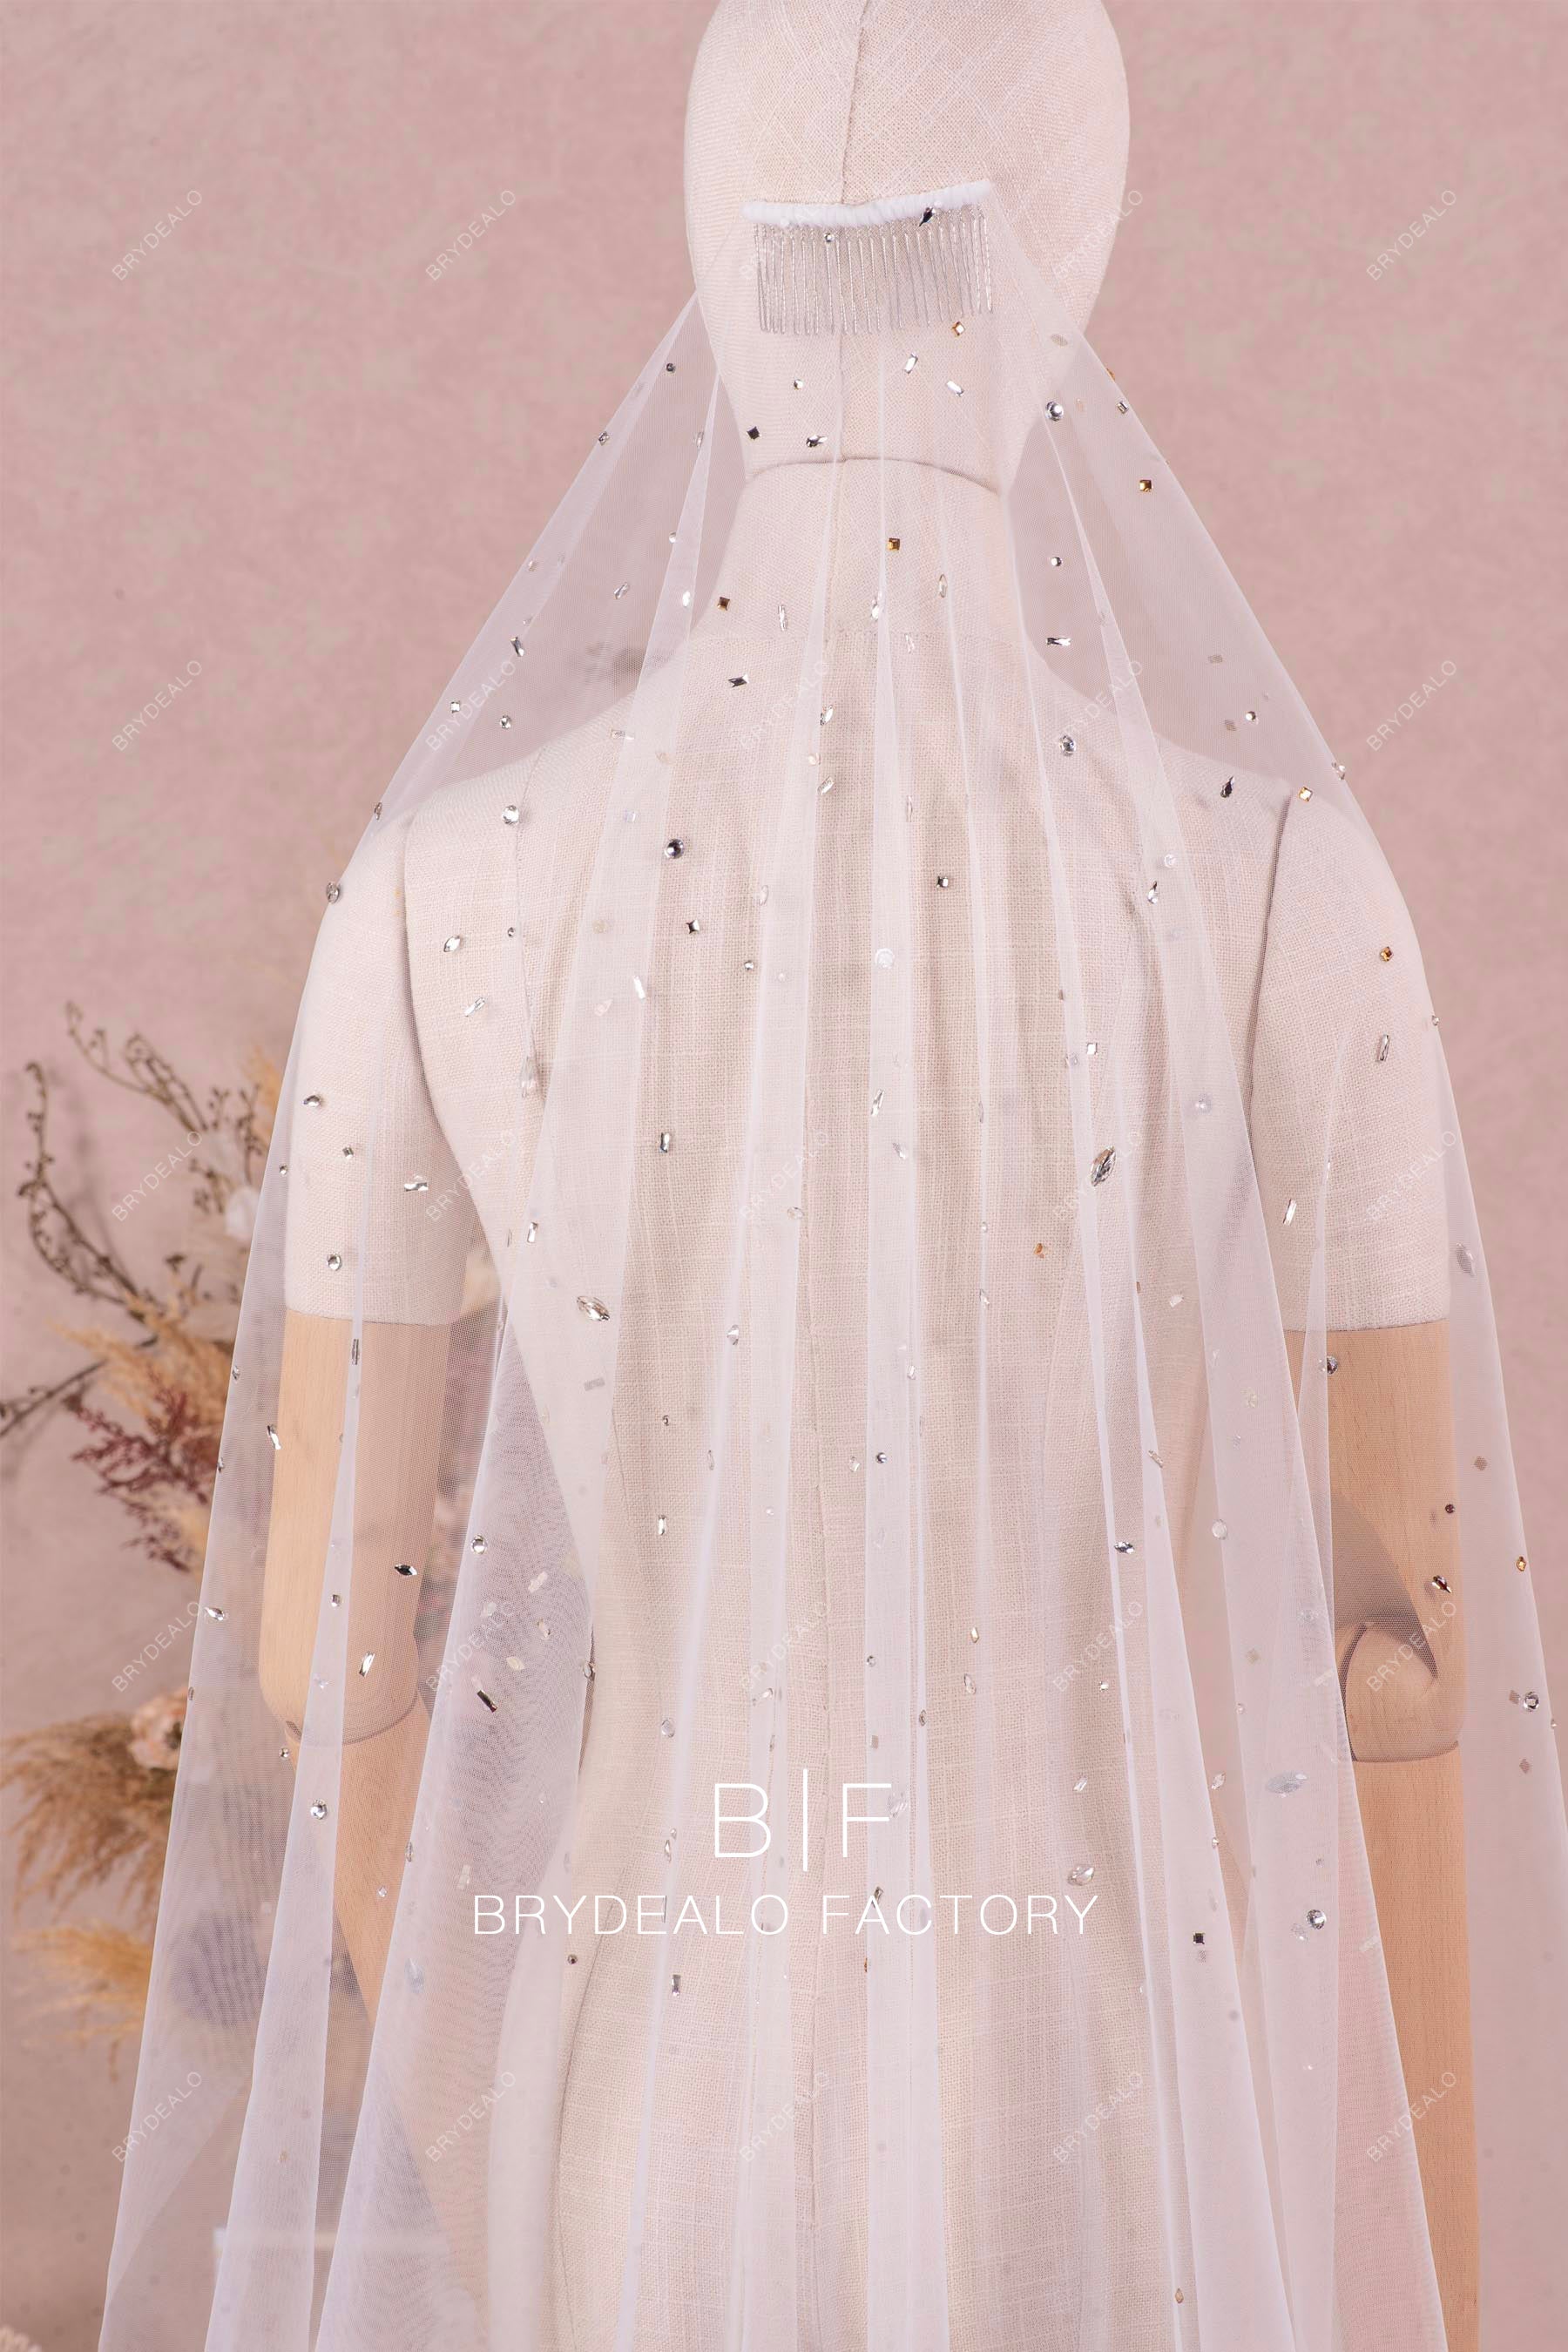 Sparkly Rhinestone Tulle Wedding Veil For Sale